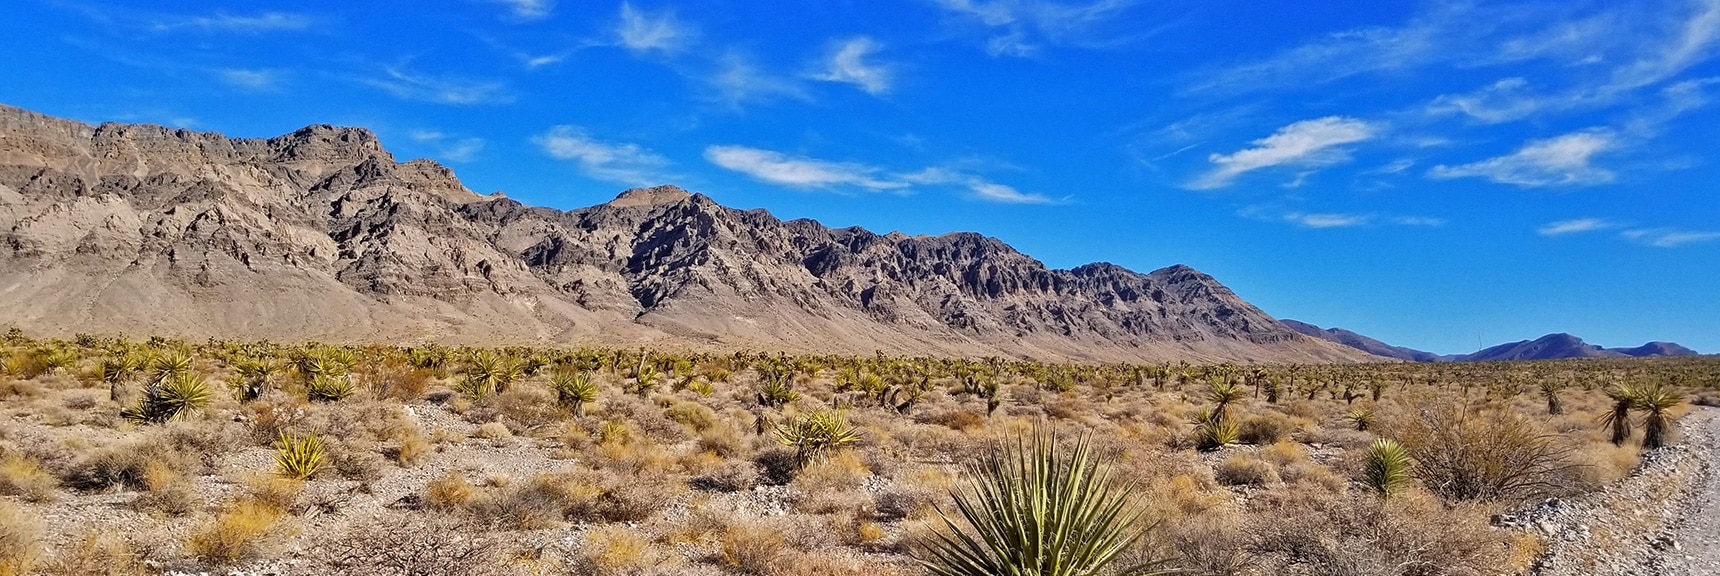 Southeast Side of Fossil Ridge from Gass Peak Road | Gass Peak Road Circuit | Desert National Wildlife Refuge | Nevada